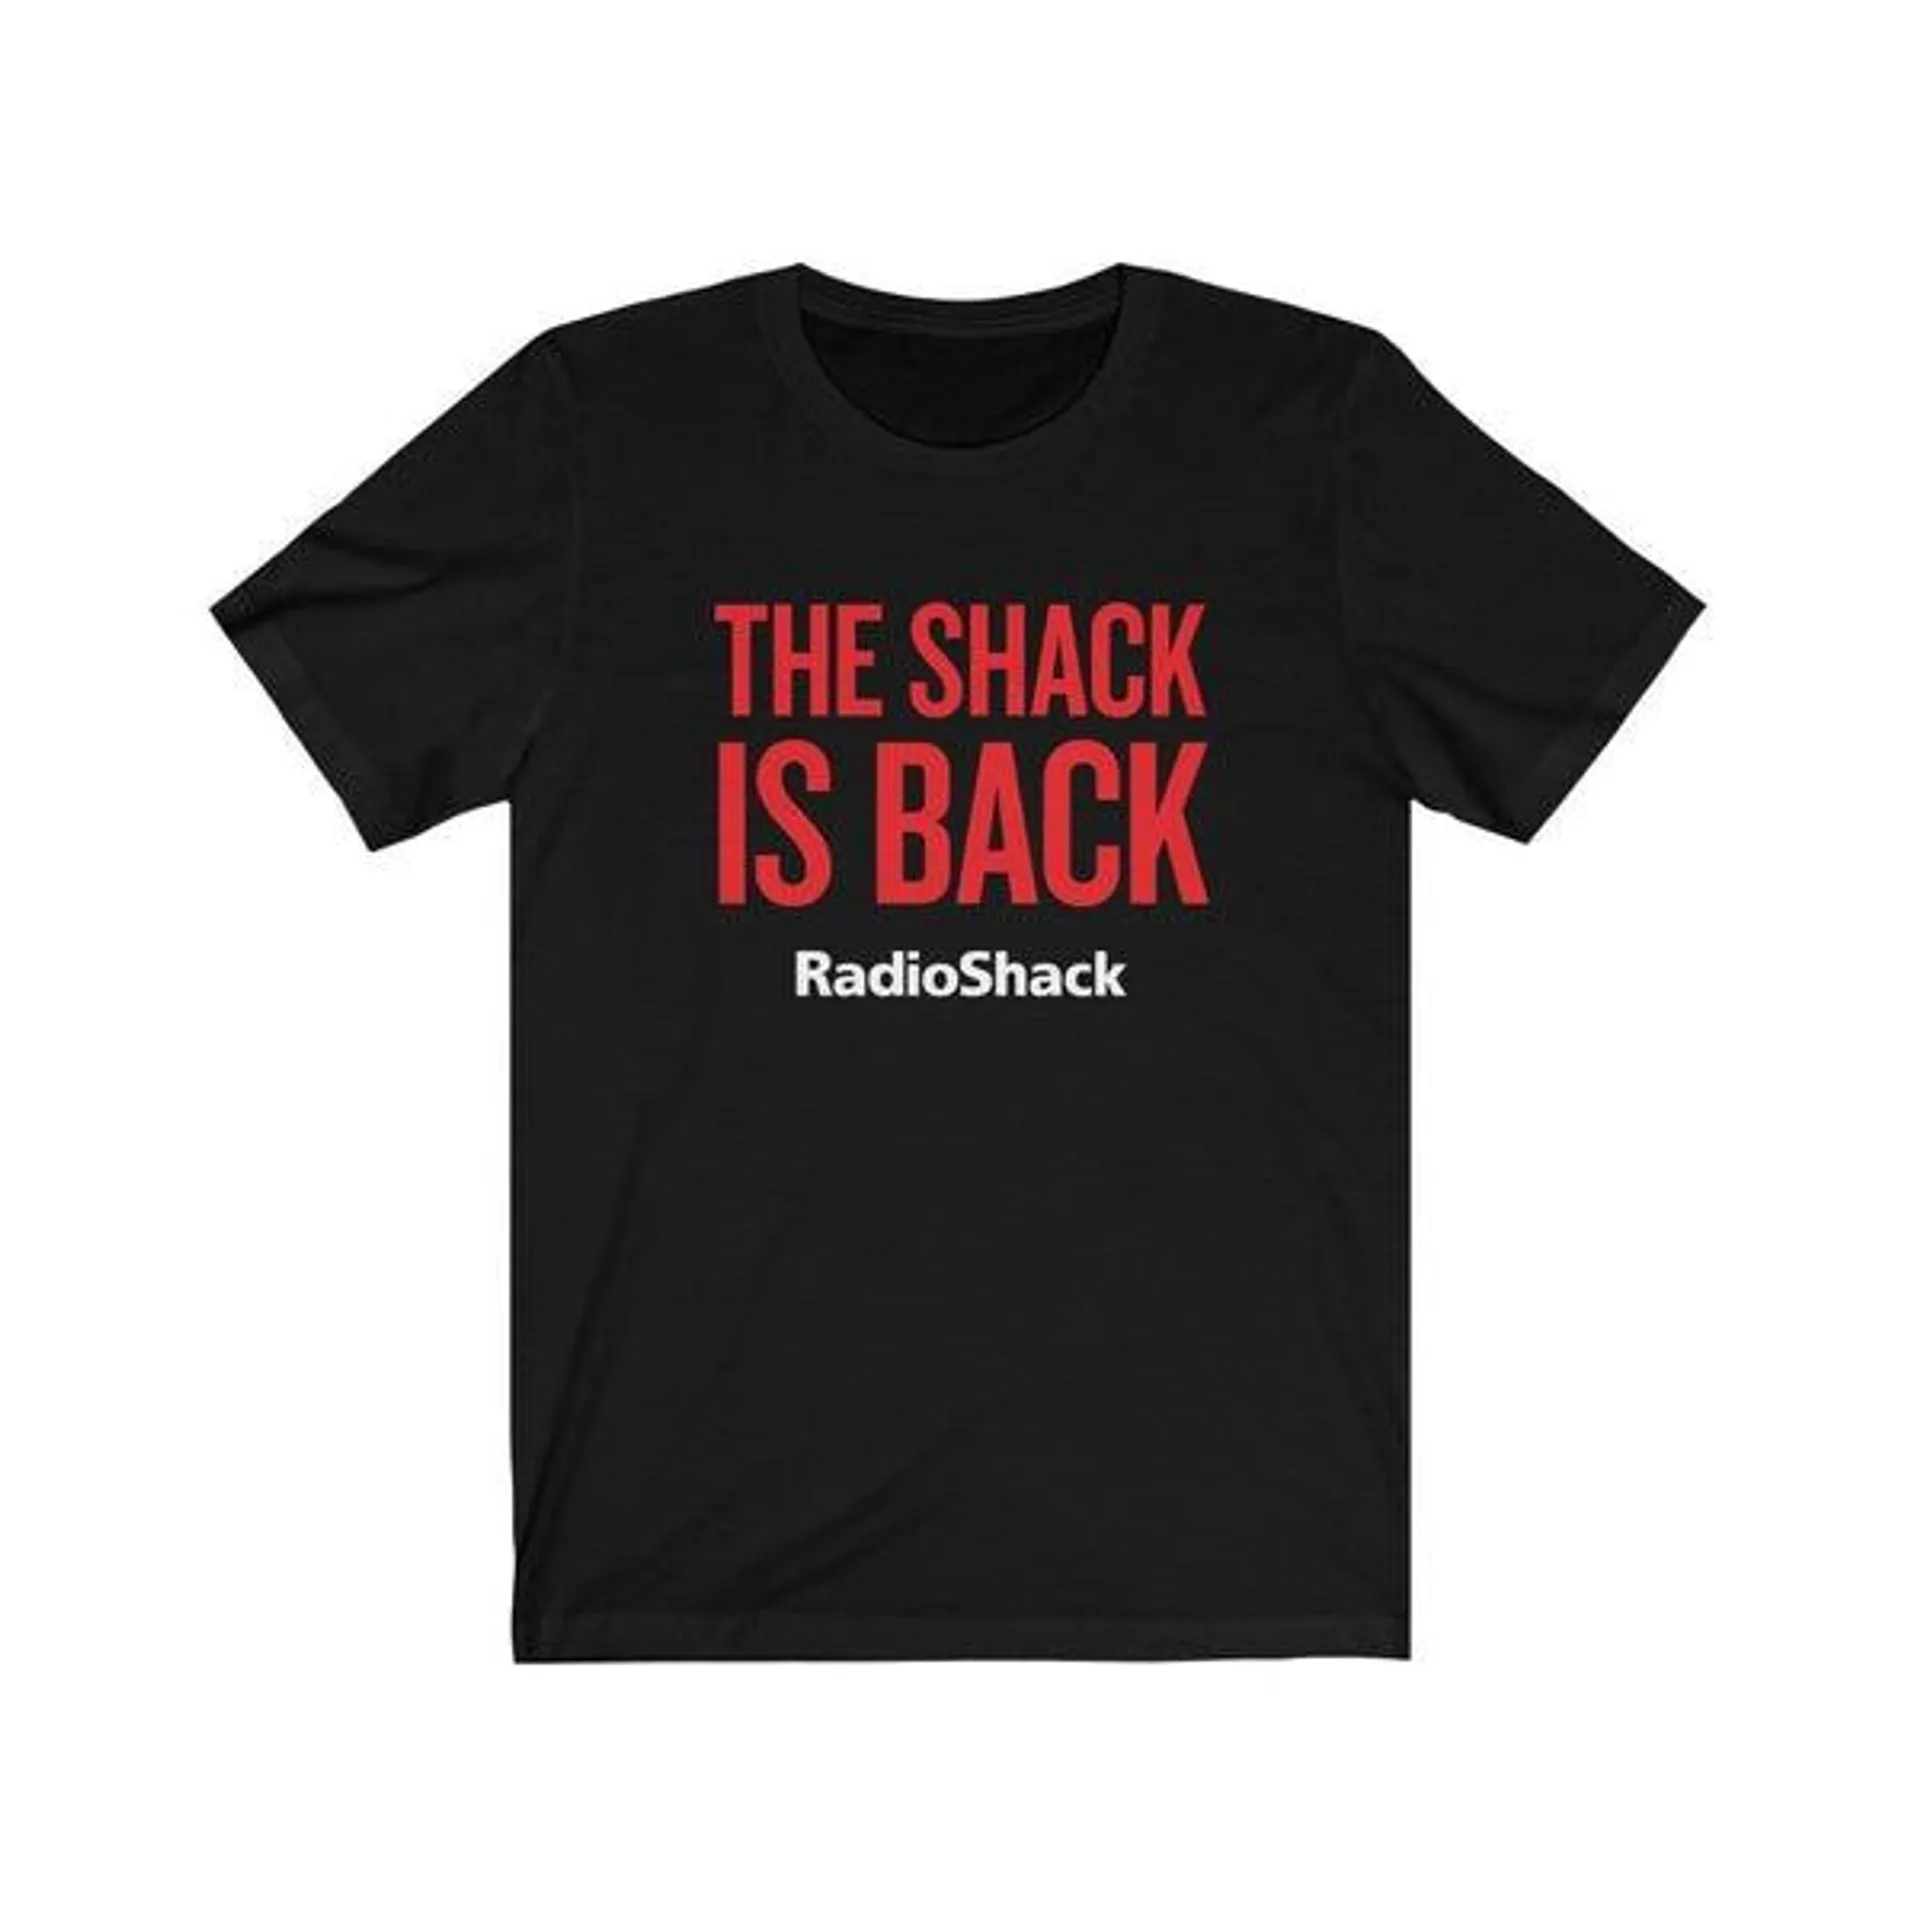 RadioShack "THE SHACK IS BACK" T-Shirt